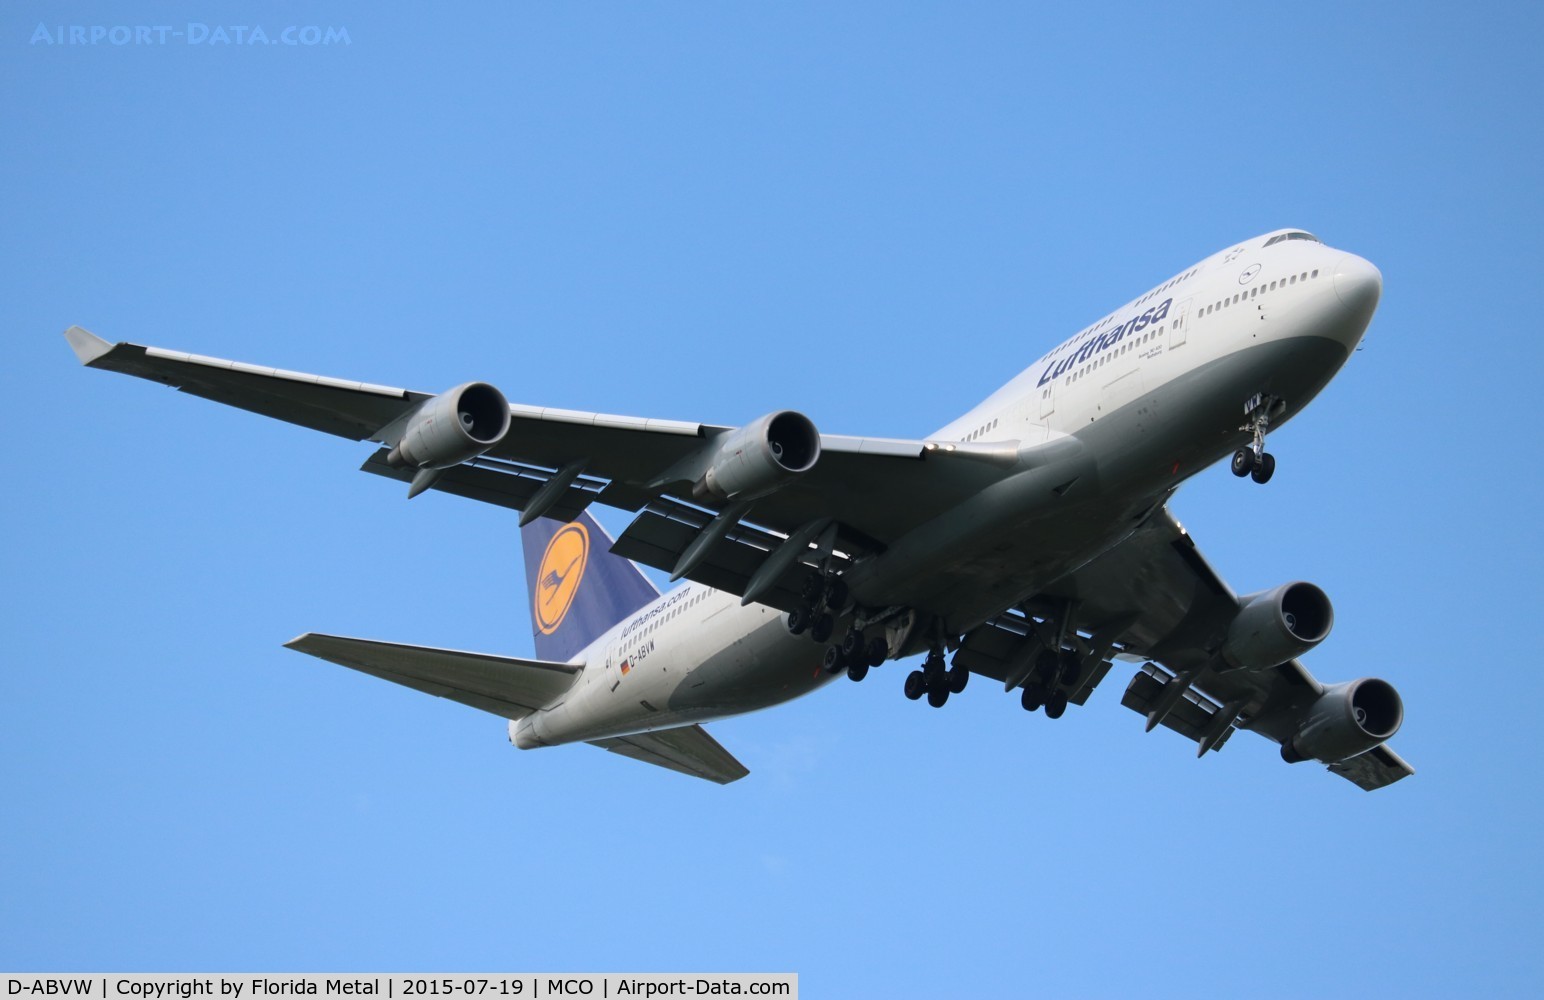 D-ABVW, 1999 Boeing 747-430 C/N 29493, Lufthansa